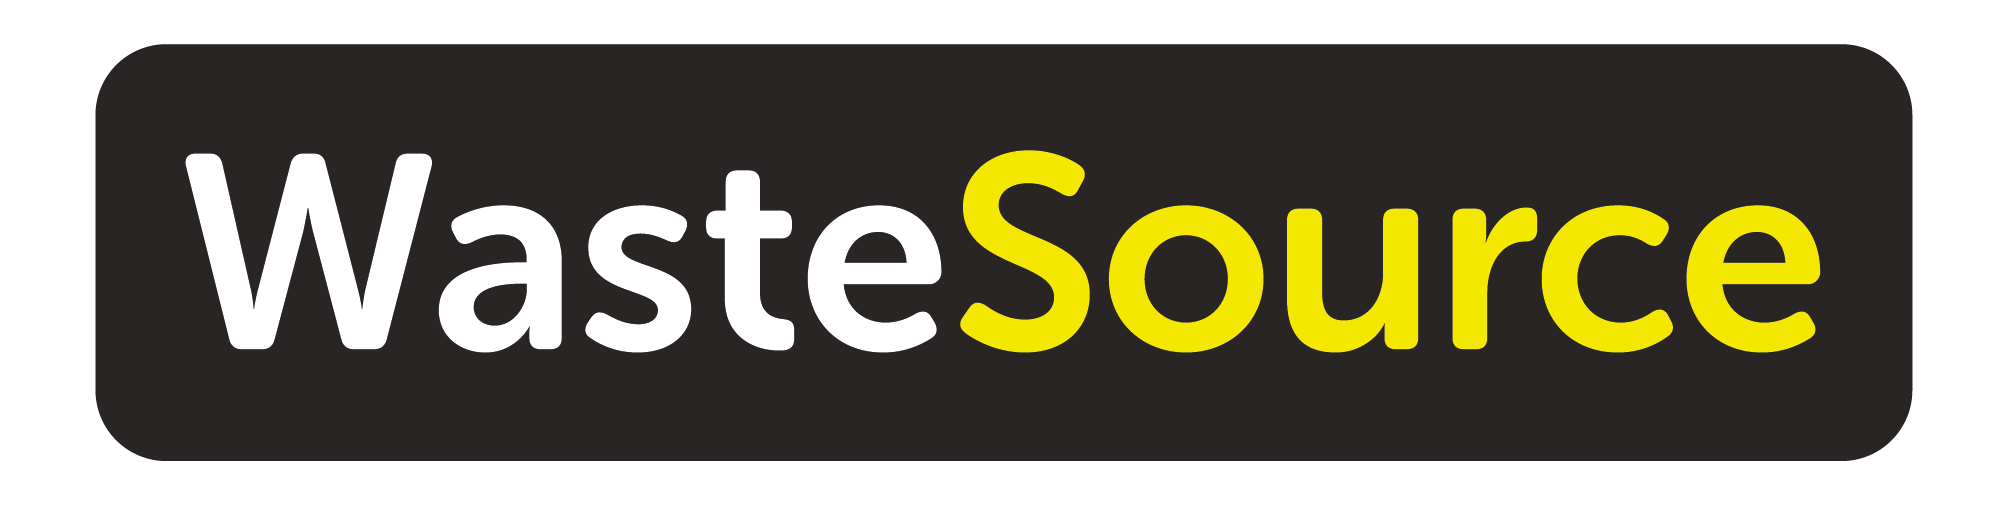 WasteSource-Logo-1